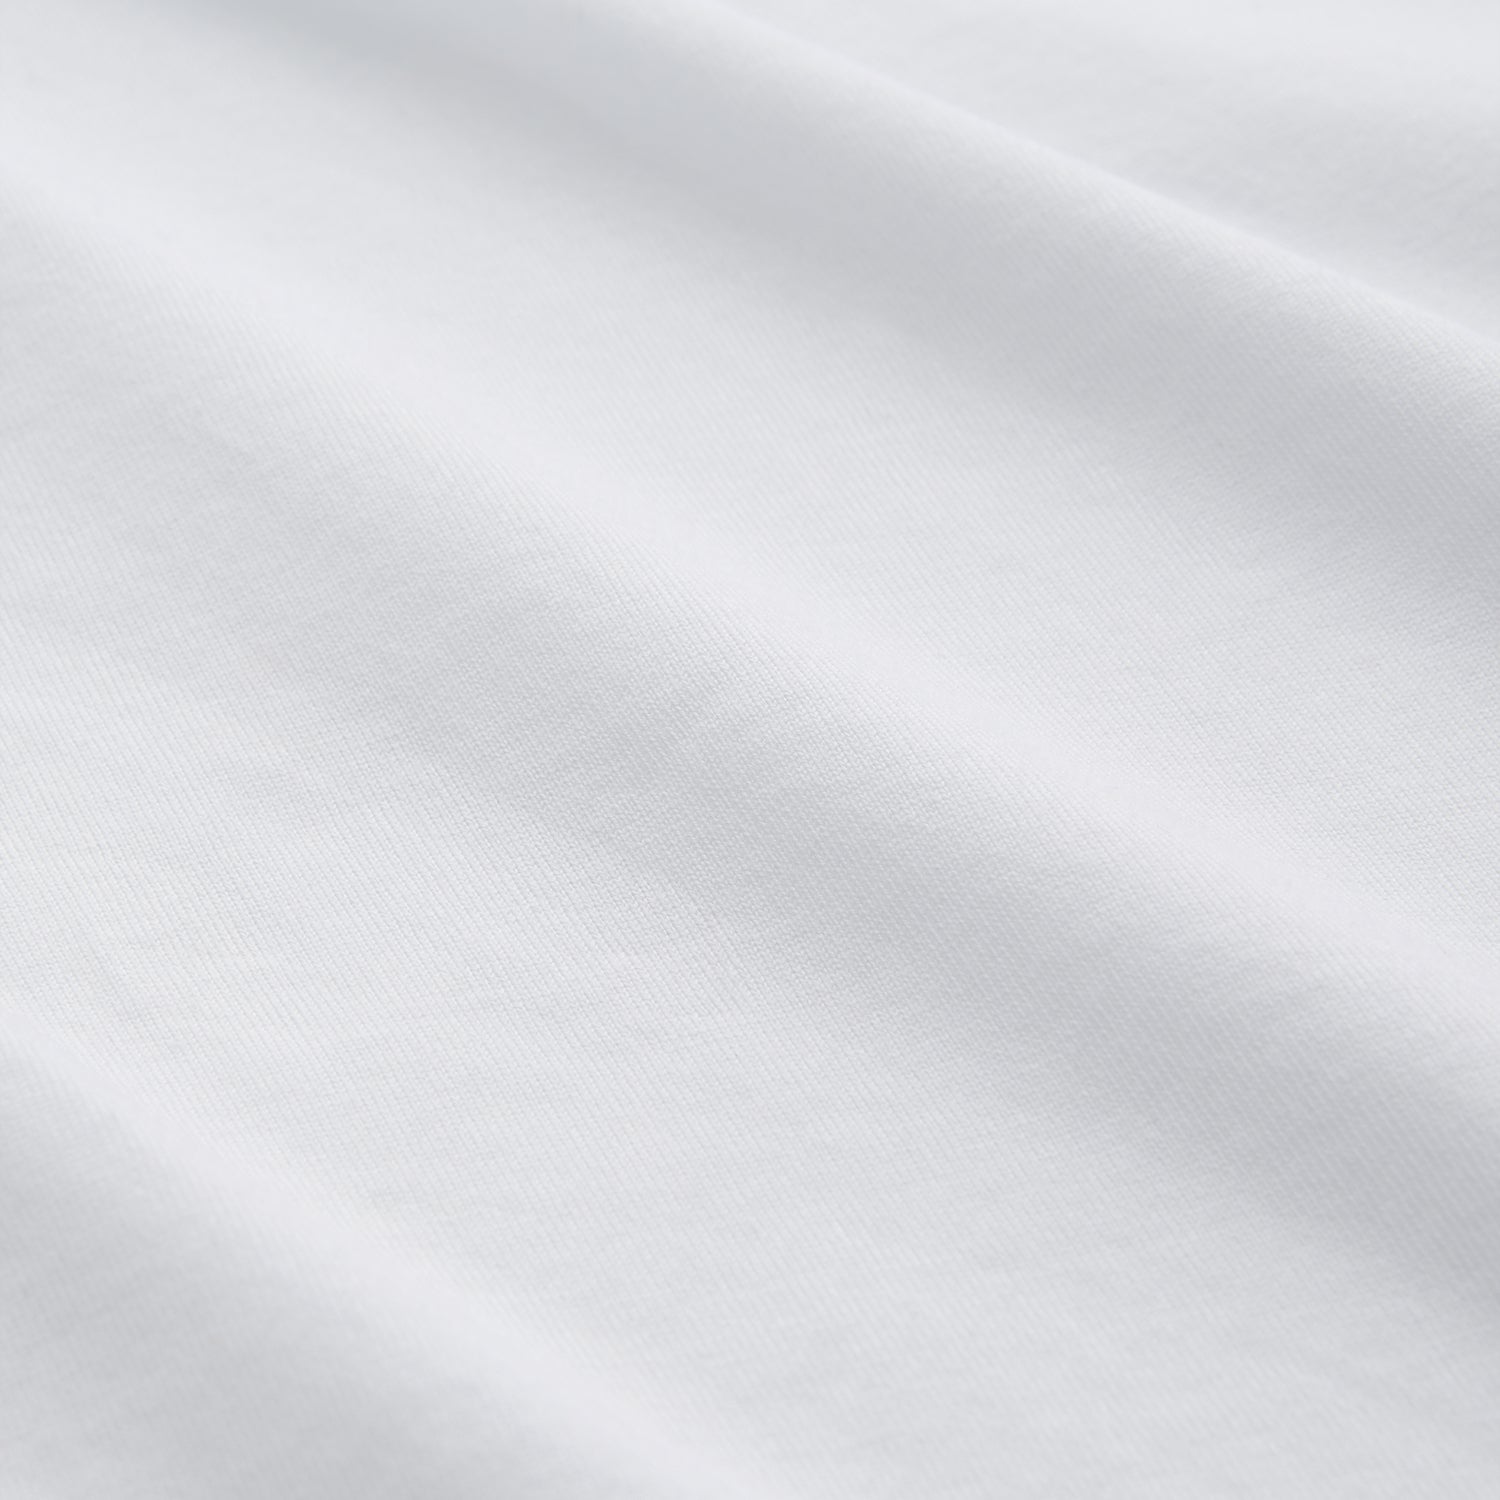 White Davey Cotton T-Shirt